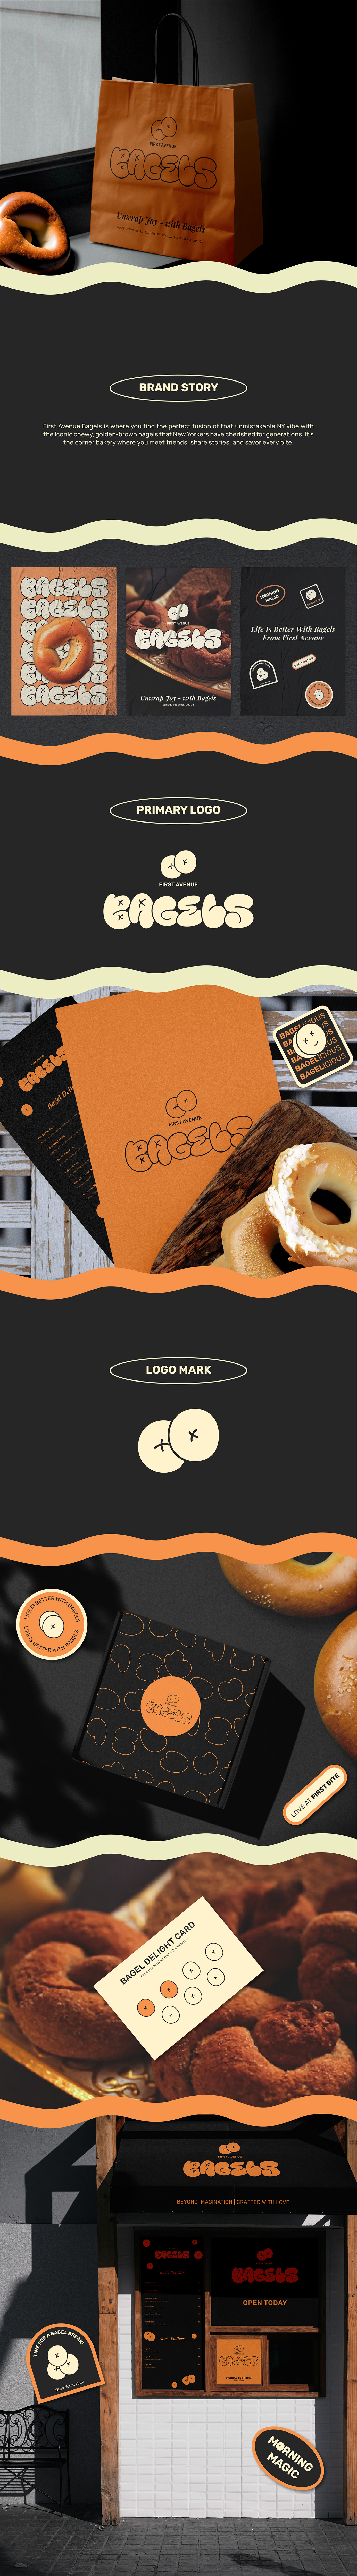 bread bakery brand identity newyork Packaging visual identity Mockup Logo Design Social media post bagels